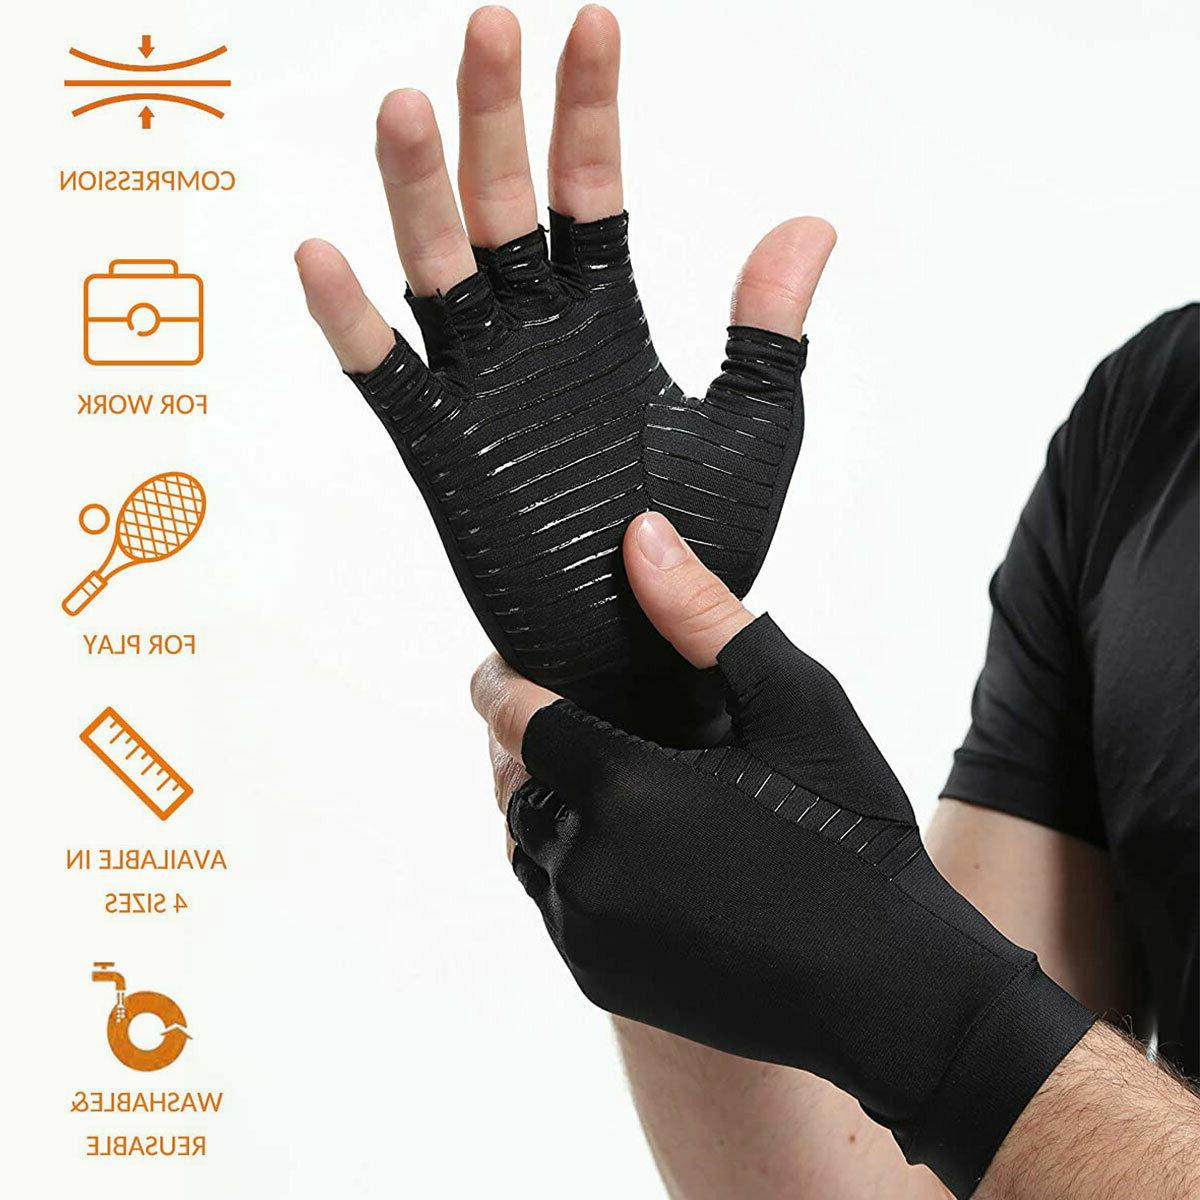 Copper Infused Compression Arthritis Gloves for Men